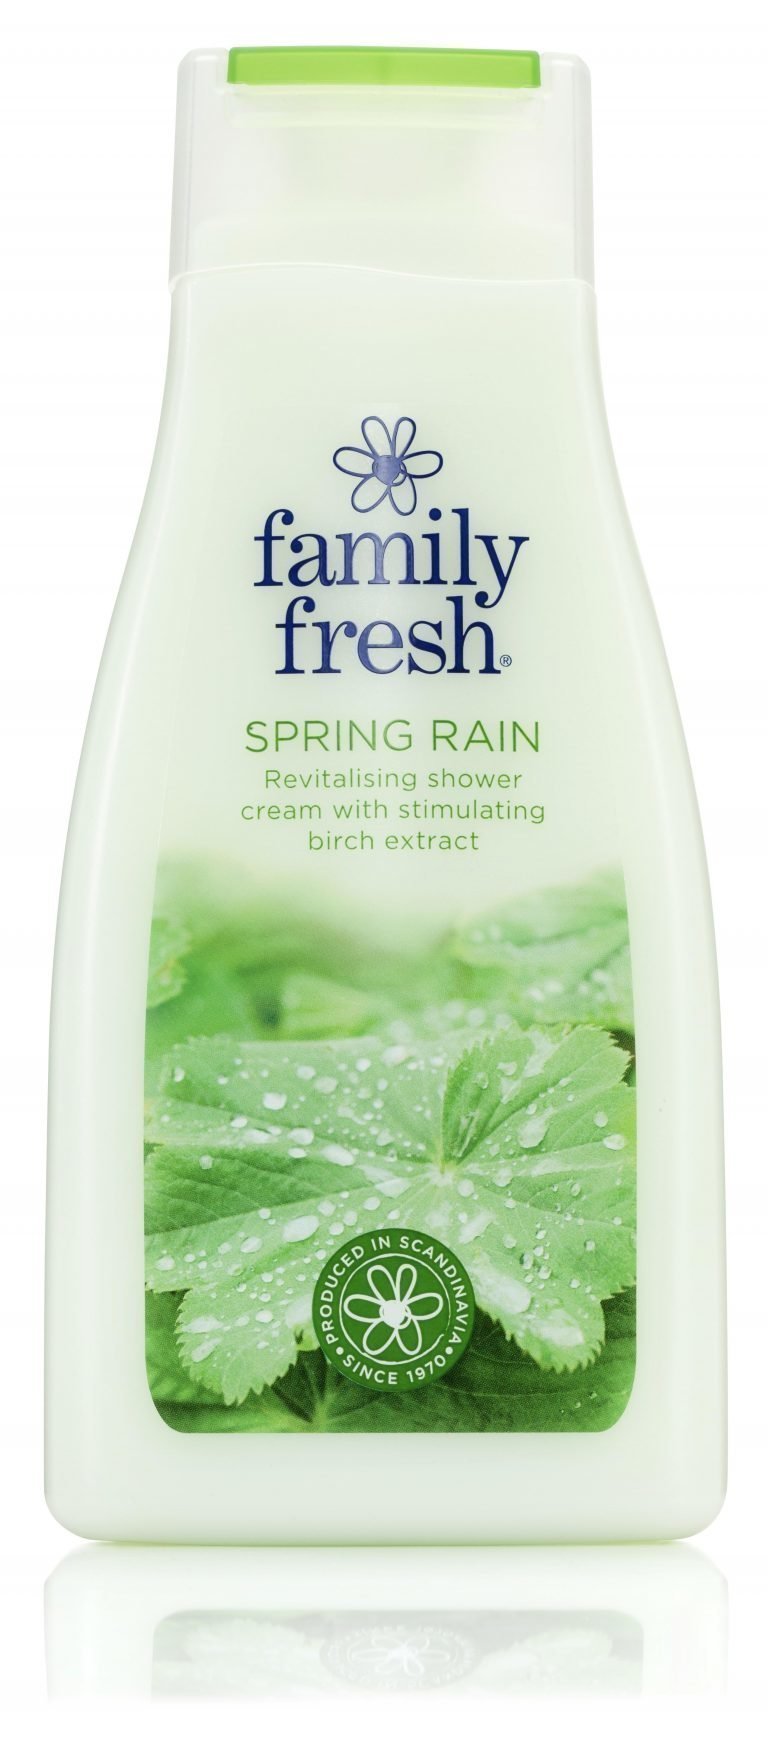 Фэмили Фреш гель для душа. Гель для душа весенний. Финский гель для душа. Family Fresh Shower Cream. Shower family